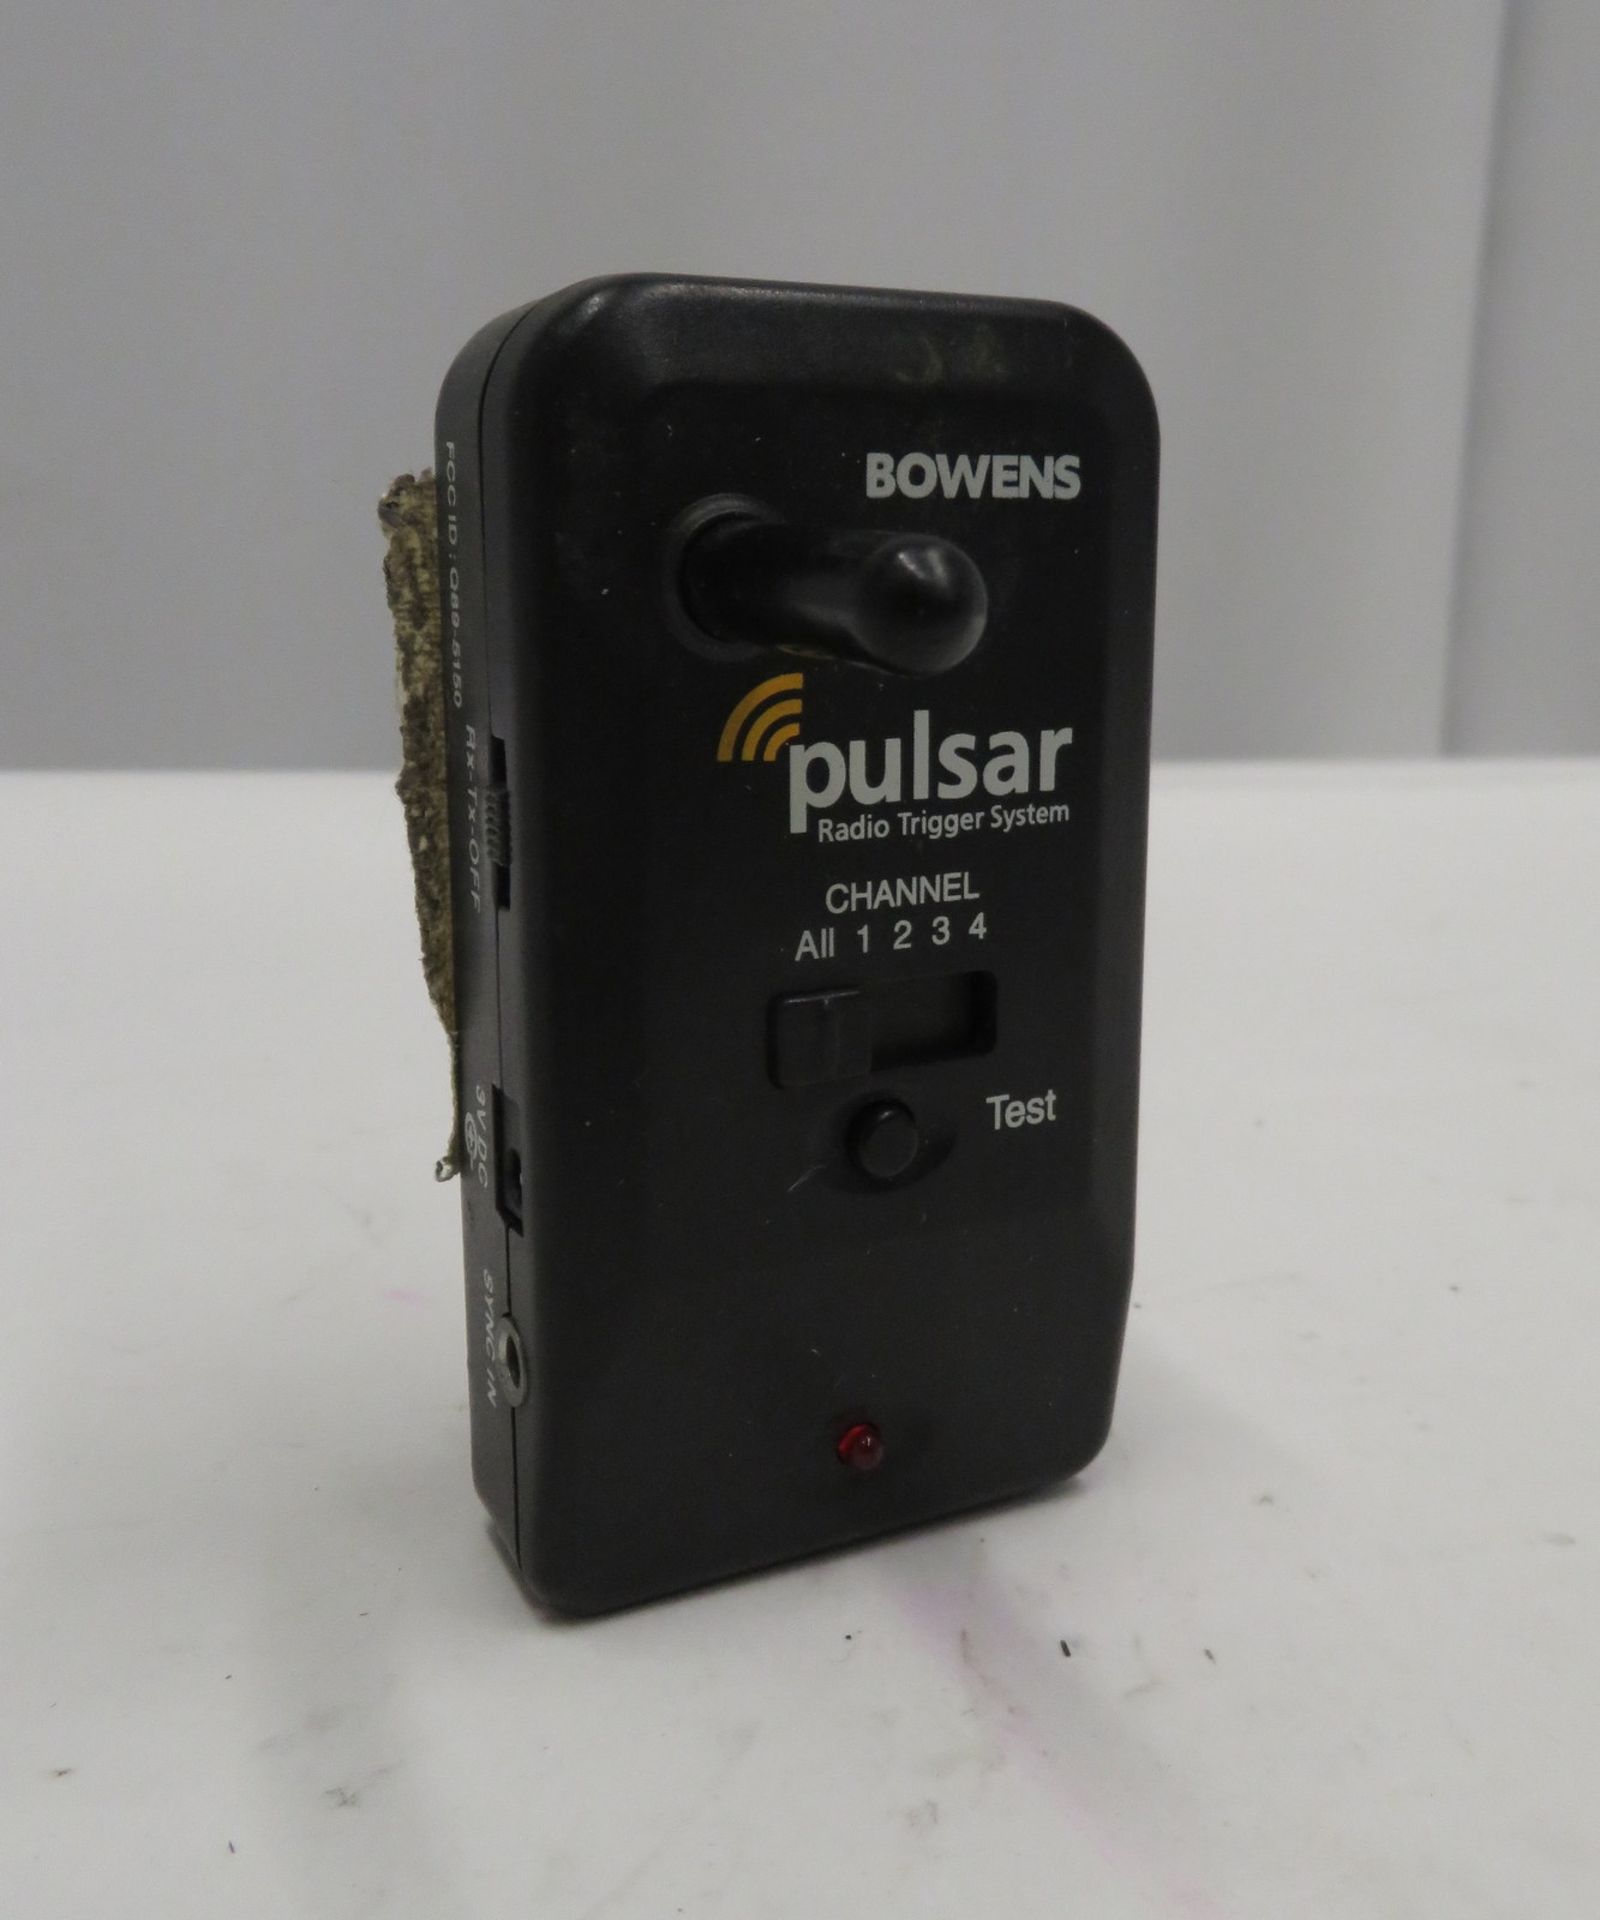 Bowens Pulsar radio trigger system, no battery cover